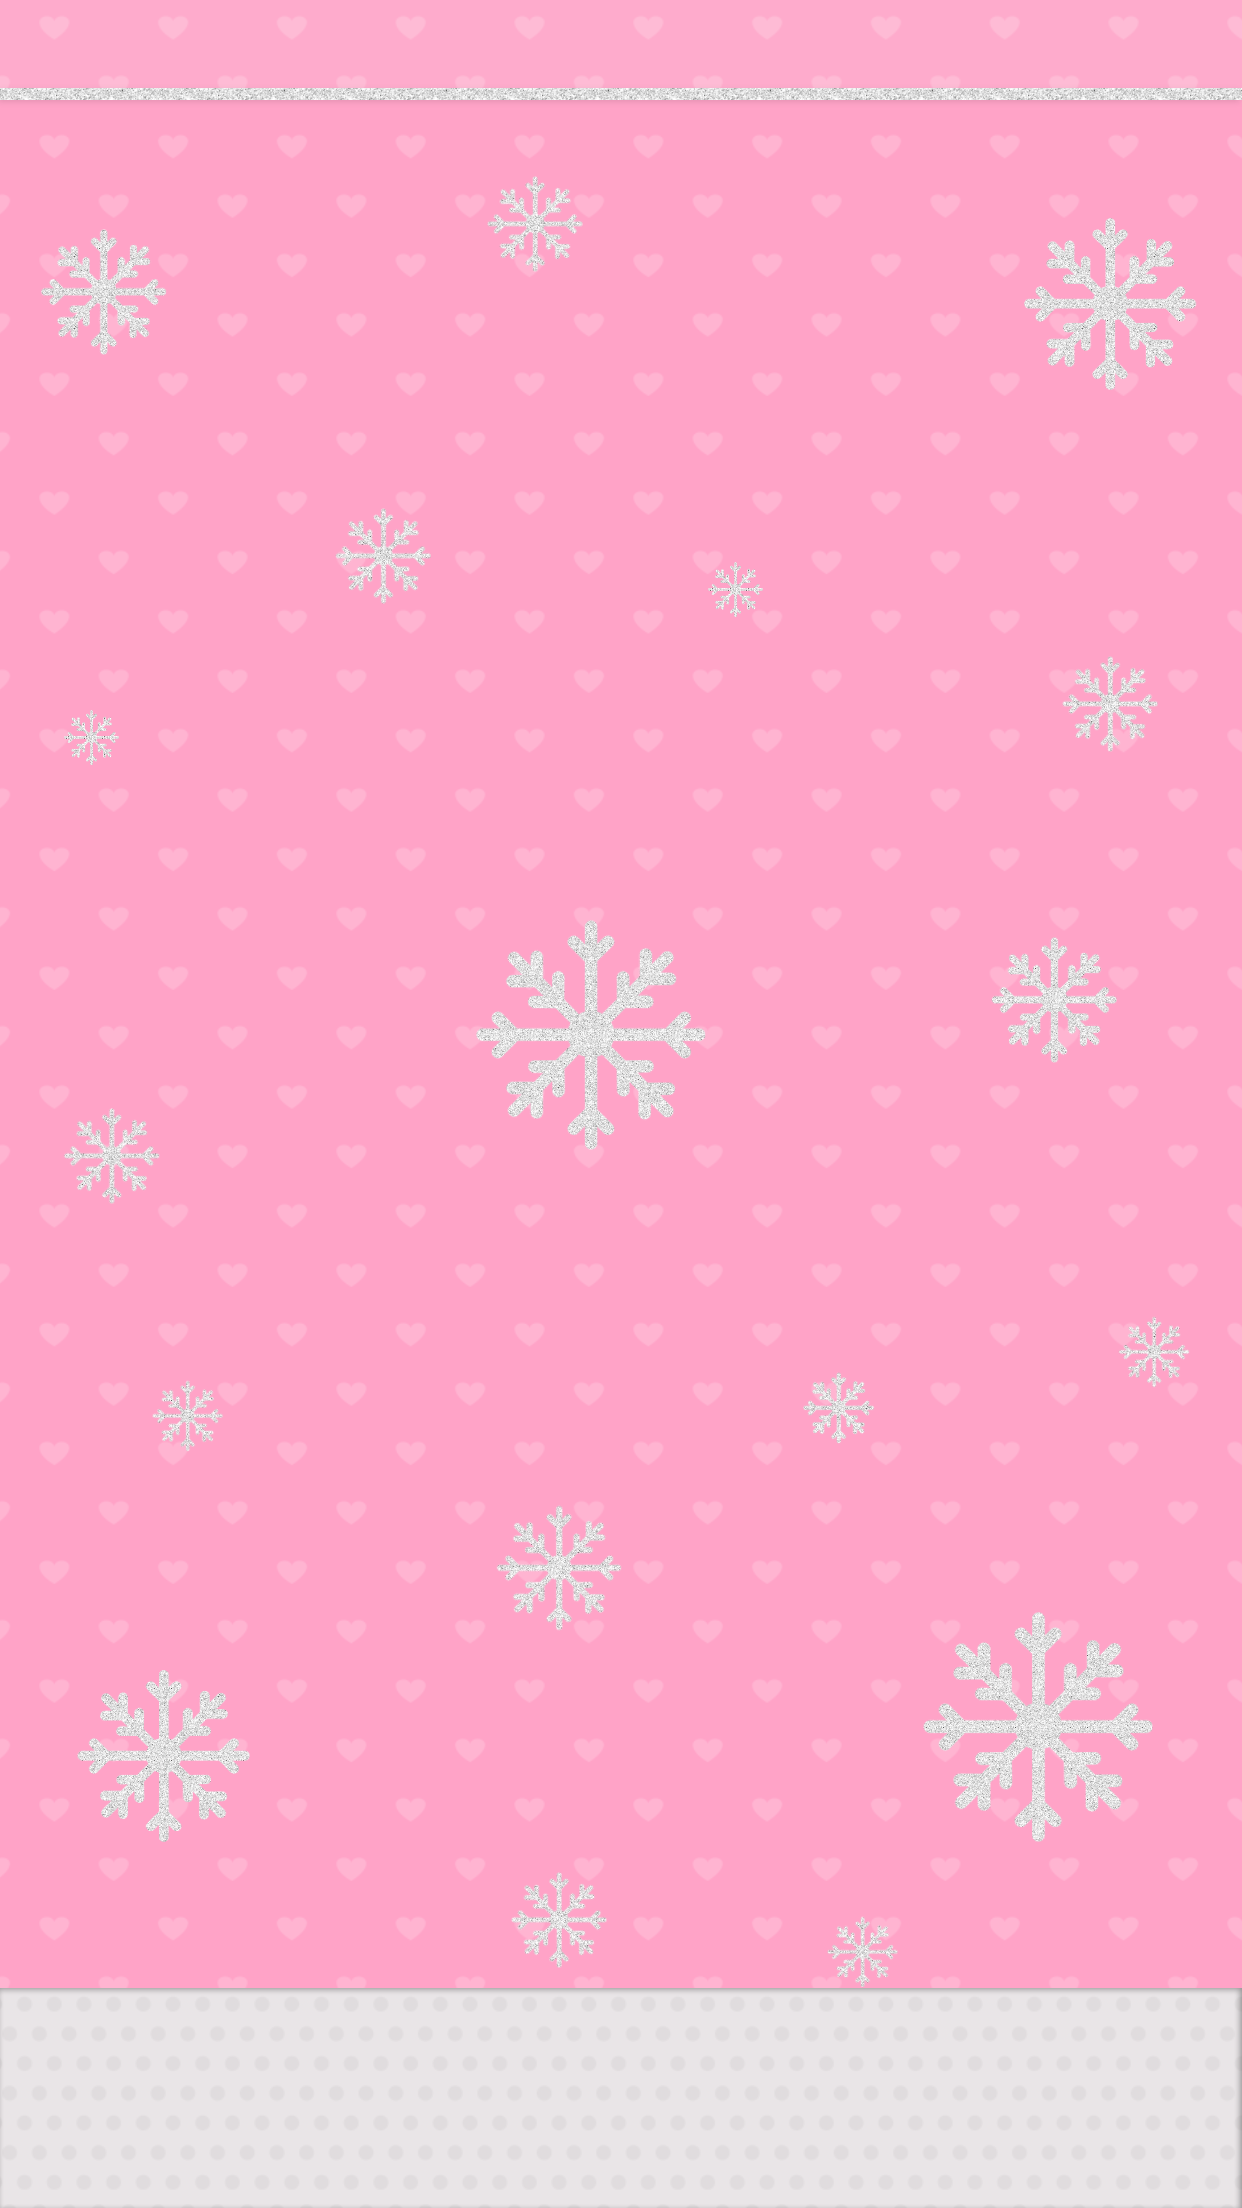 Cute Pink snowflakes christmas wallpaper. Wallpaper iphone christmas, Christmas wallpaper iphone cute, Christmas wallpaper